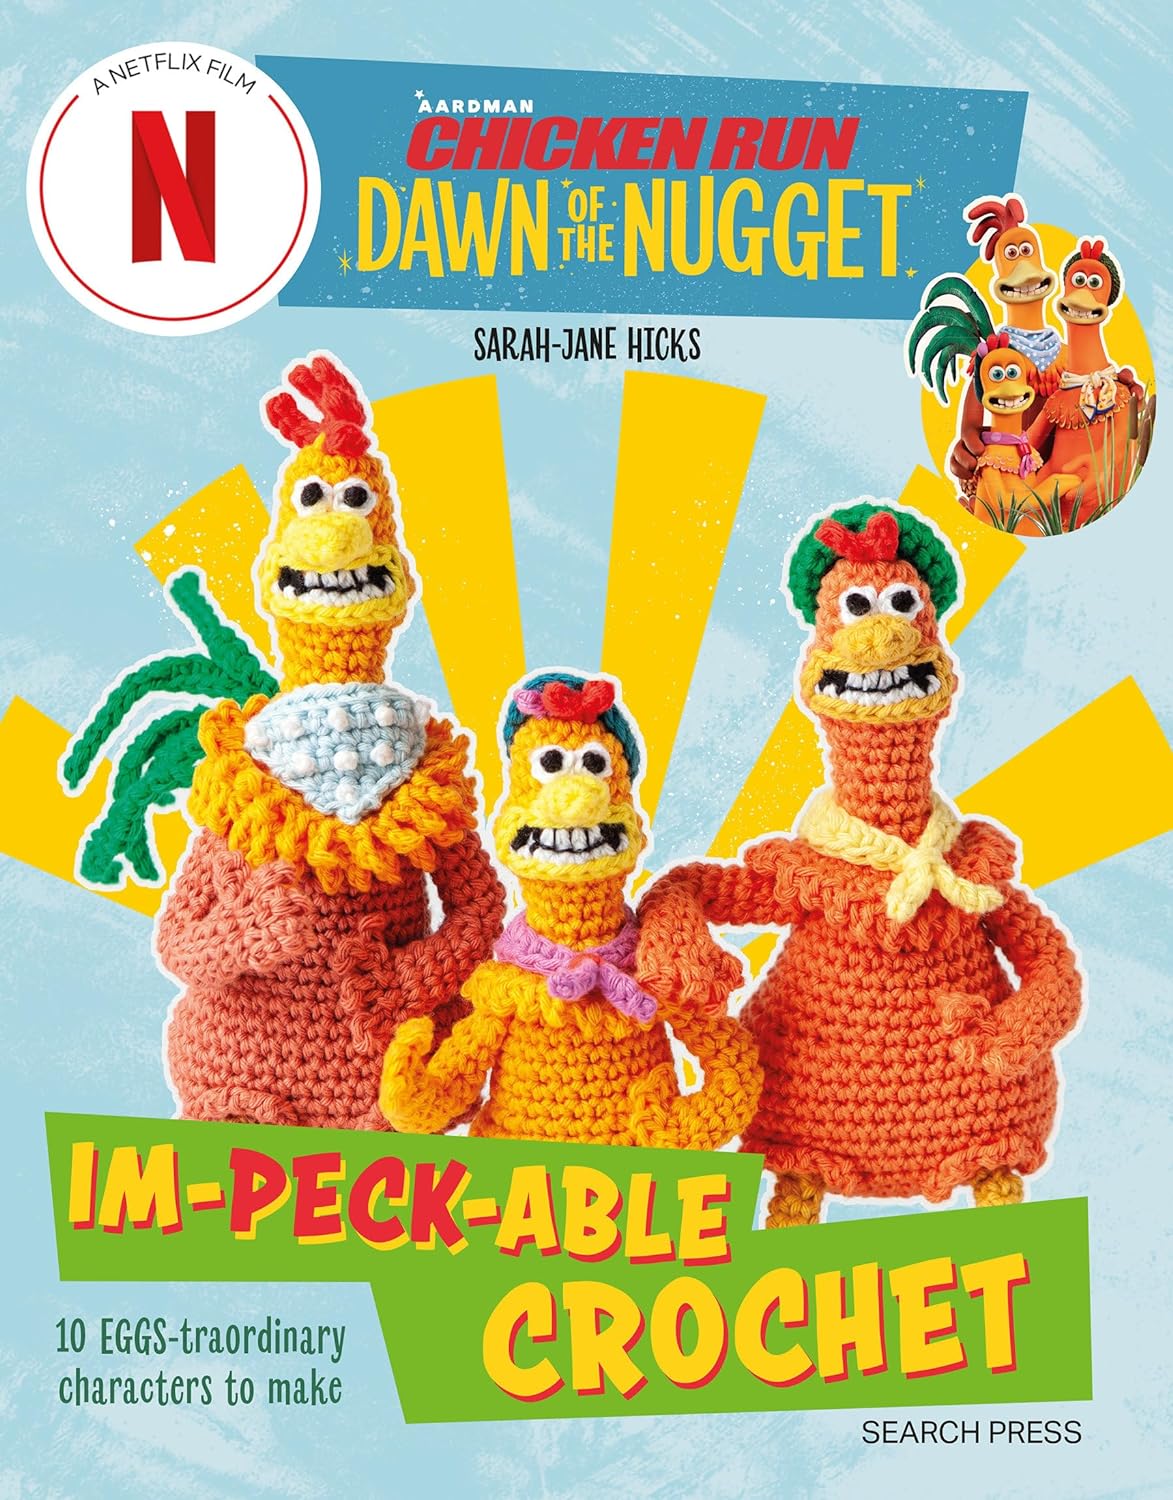 ‘Chicken Run: Dawn of the Nugget’ Im-peck-able Crochet